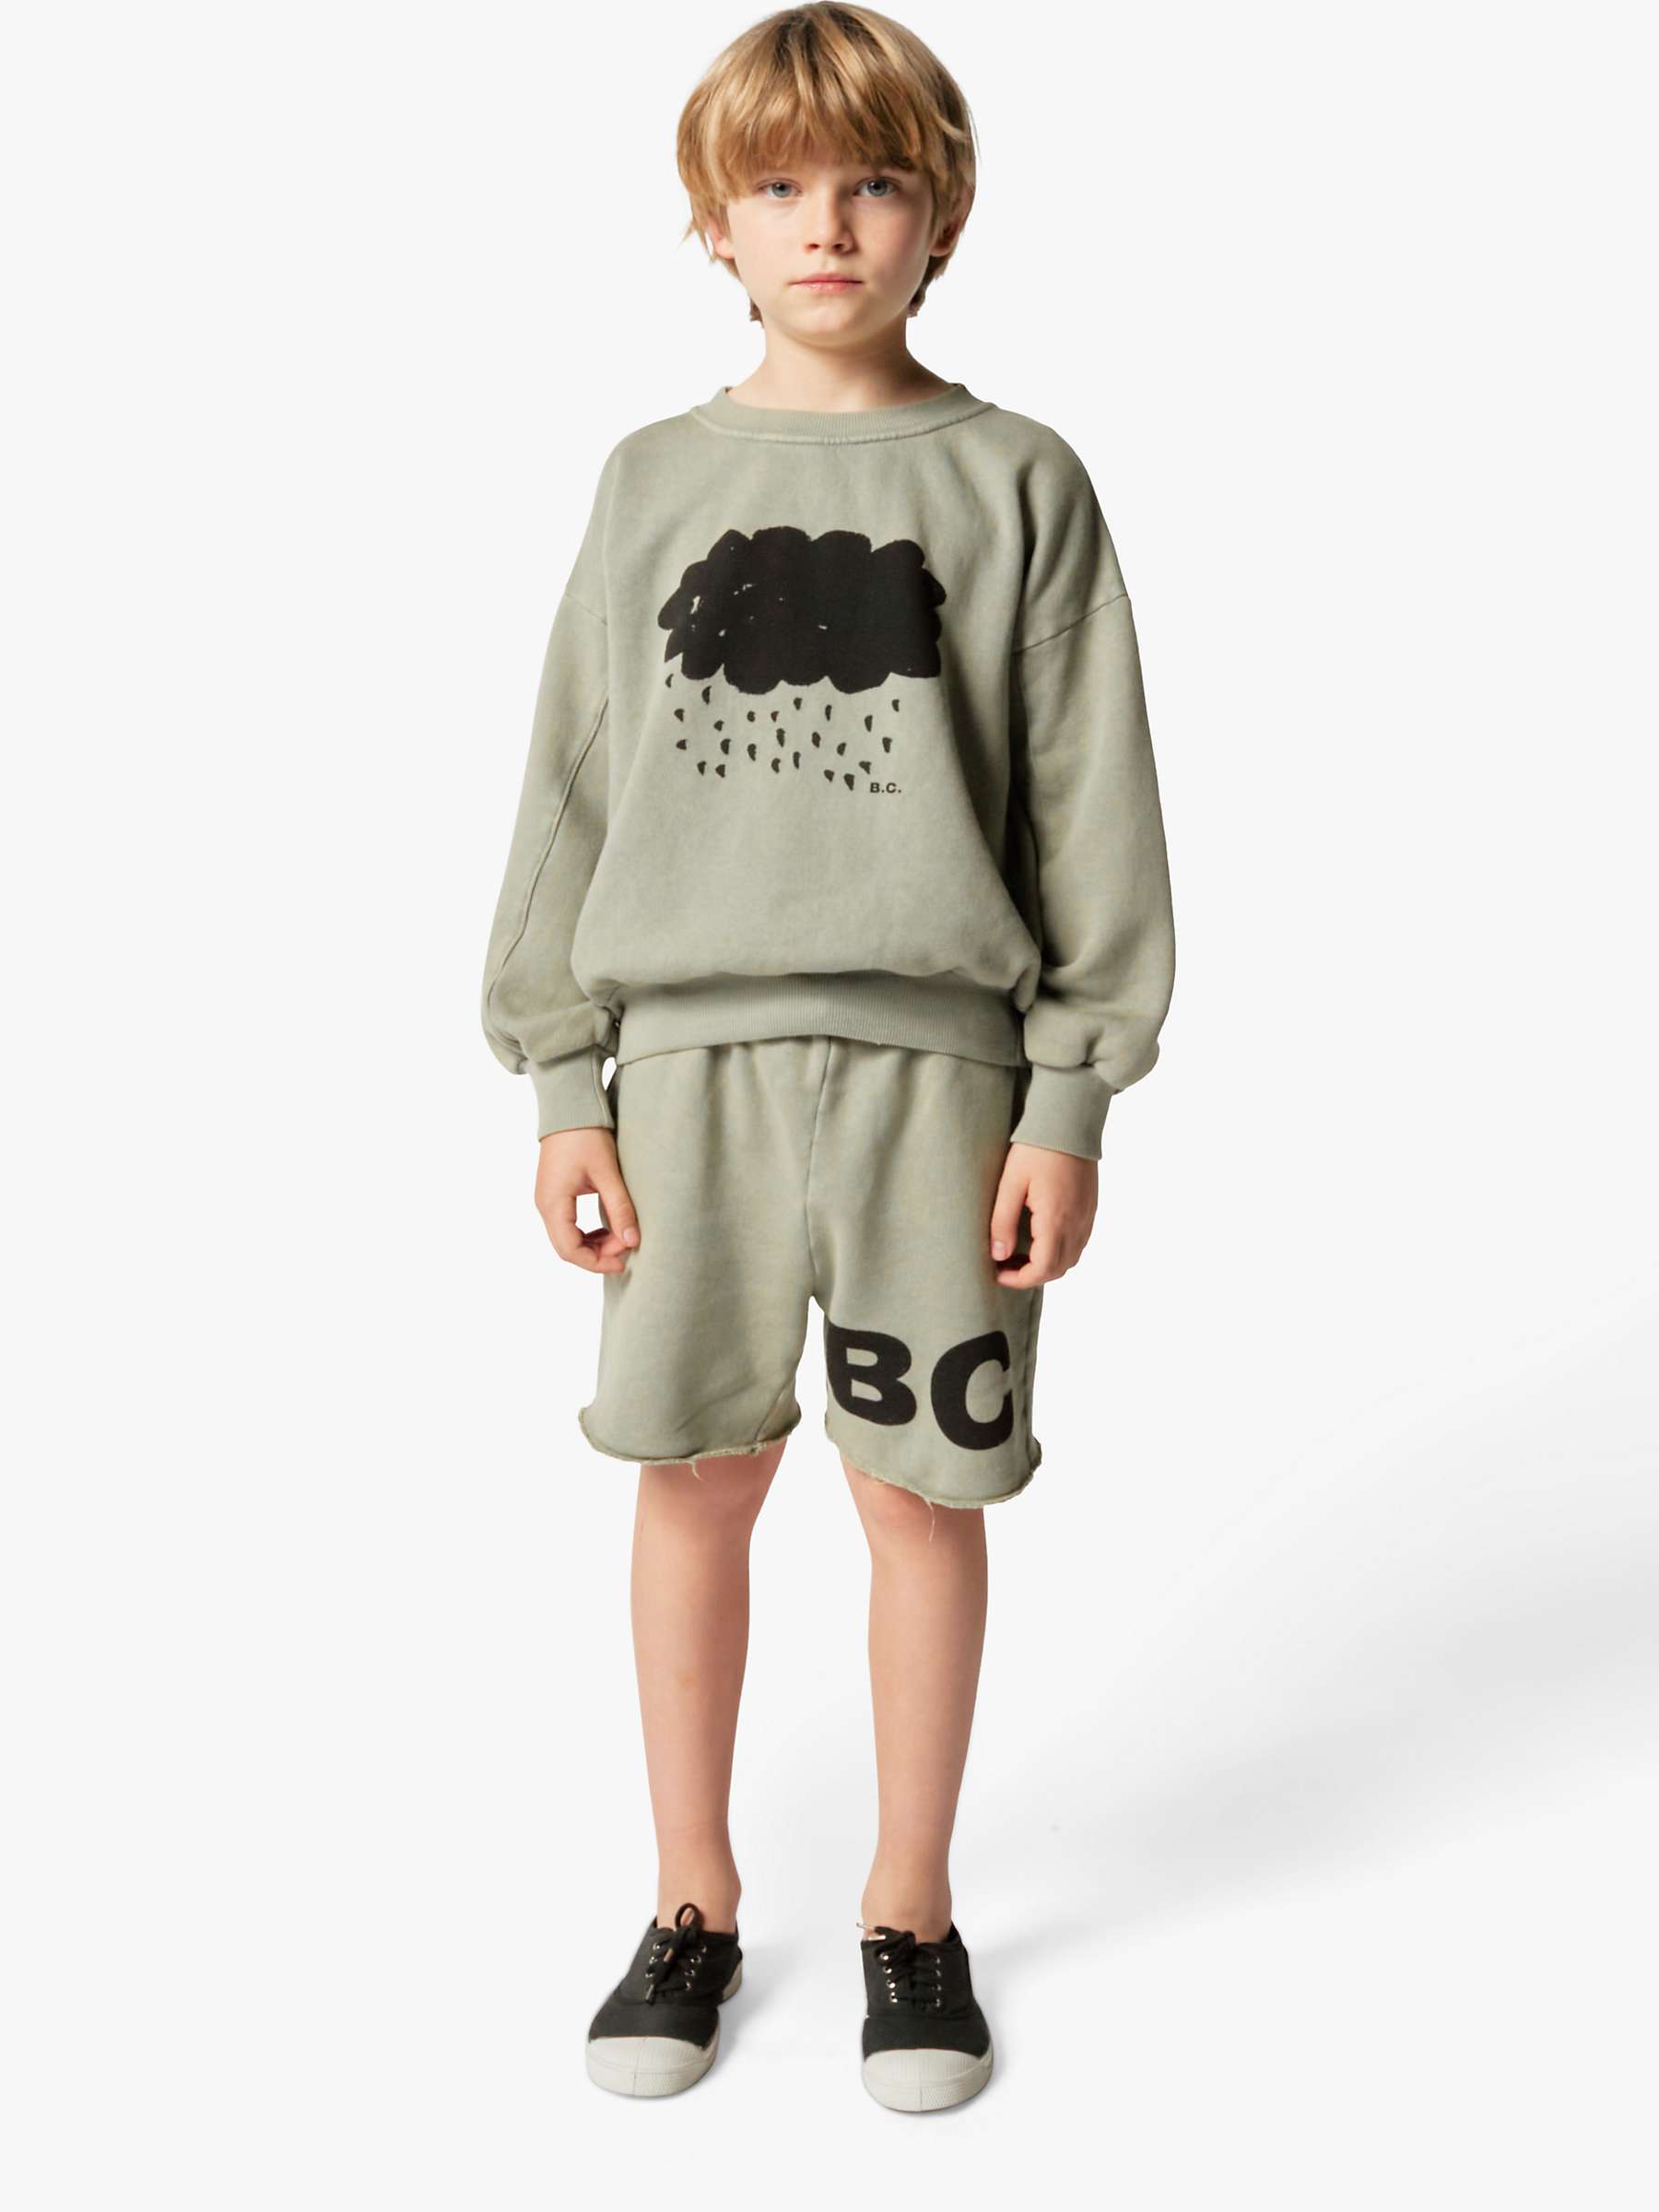 Buy Bobo Choses Kids' Organic Cotton Blend Cloud Sweatshirt, Khaki Online at johnlewis.com